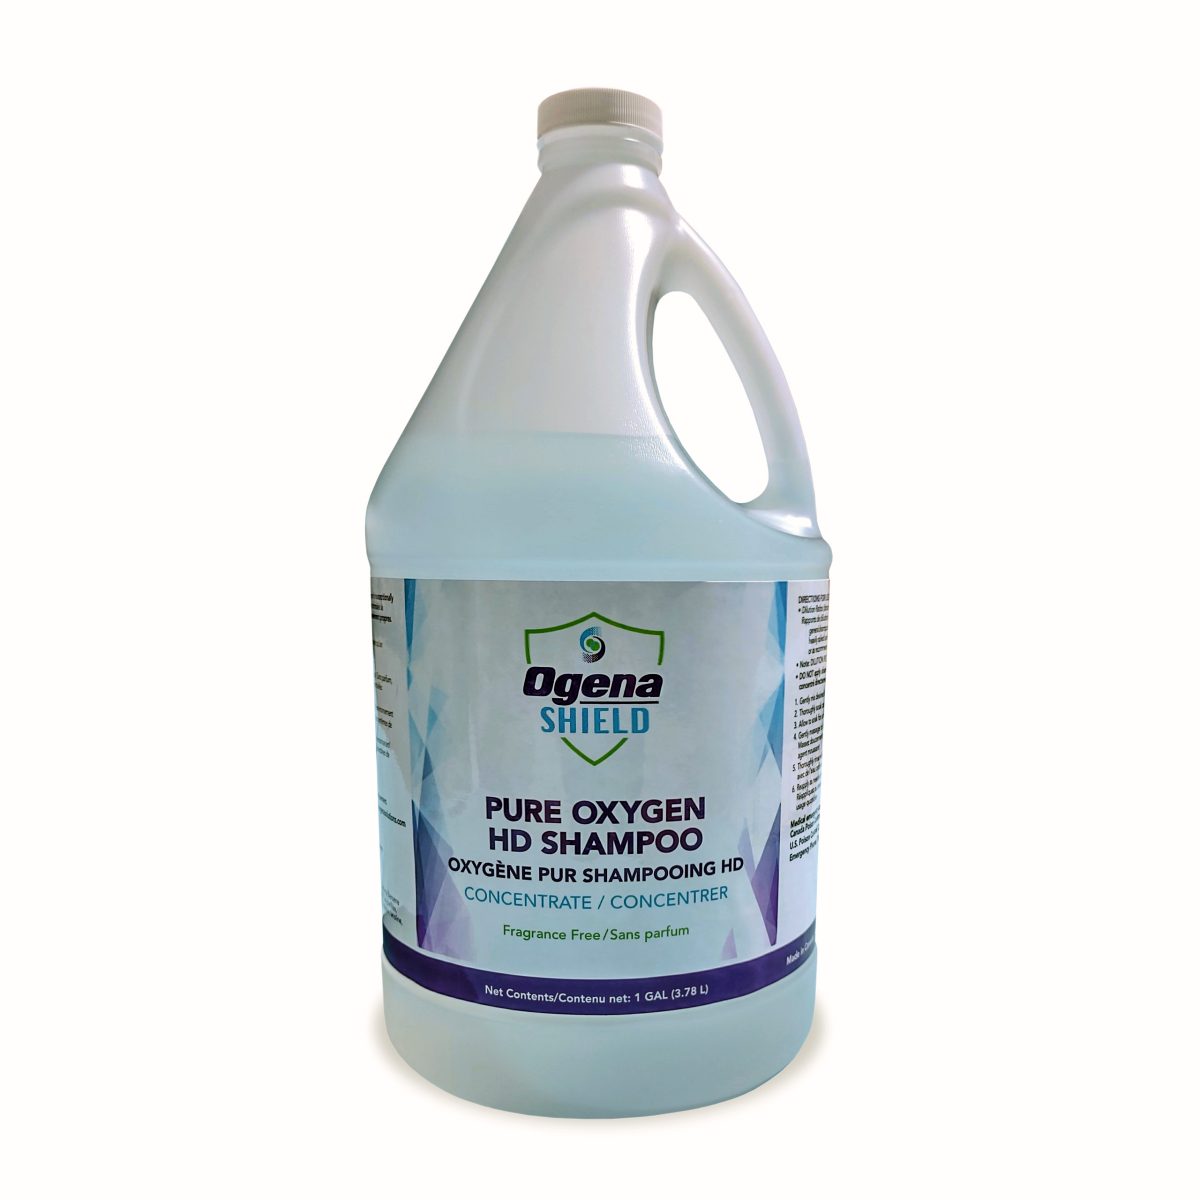 OgenaShield Pure Oxygen® HD Shampoo